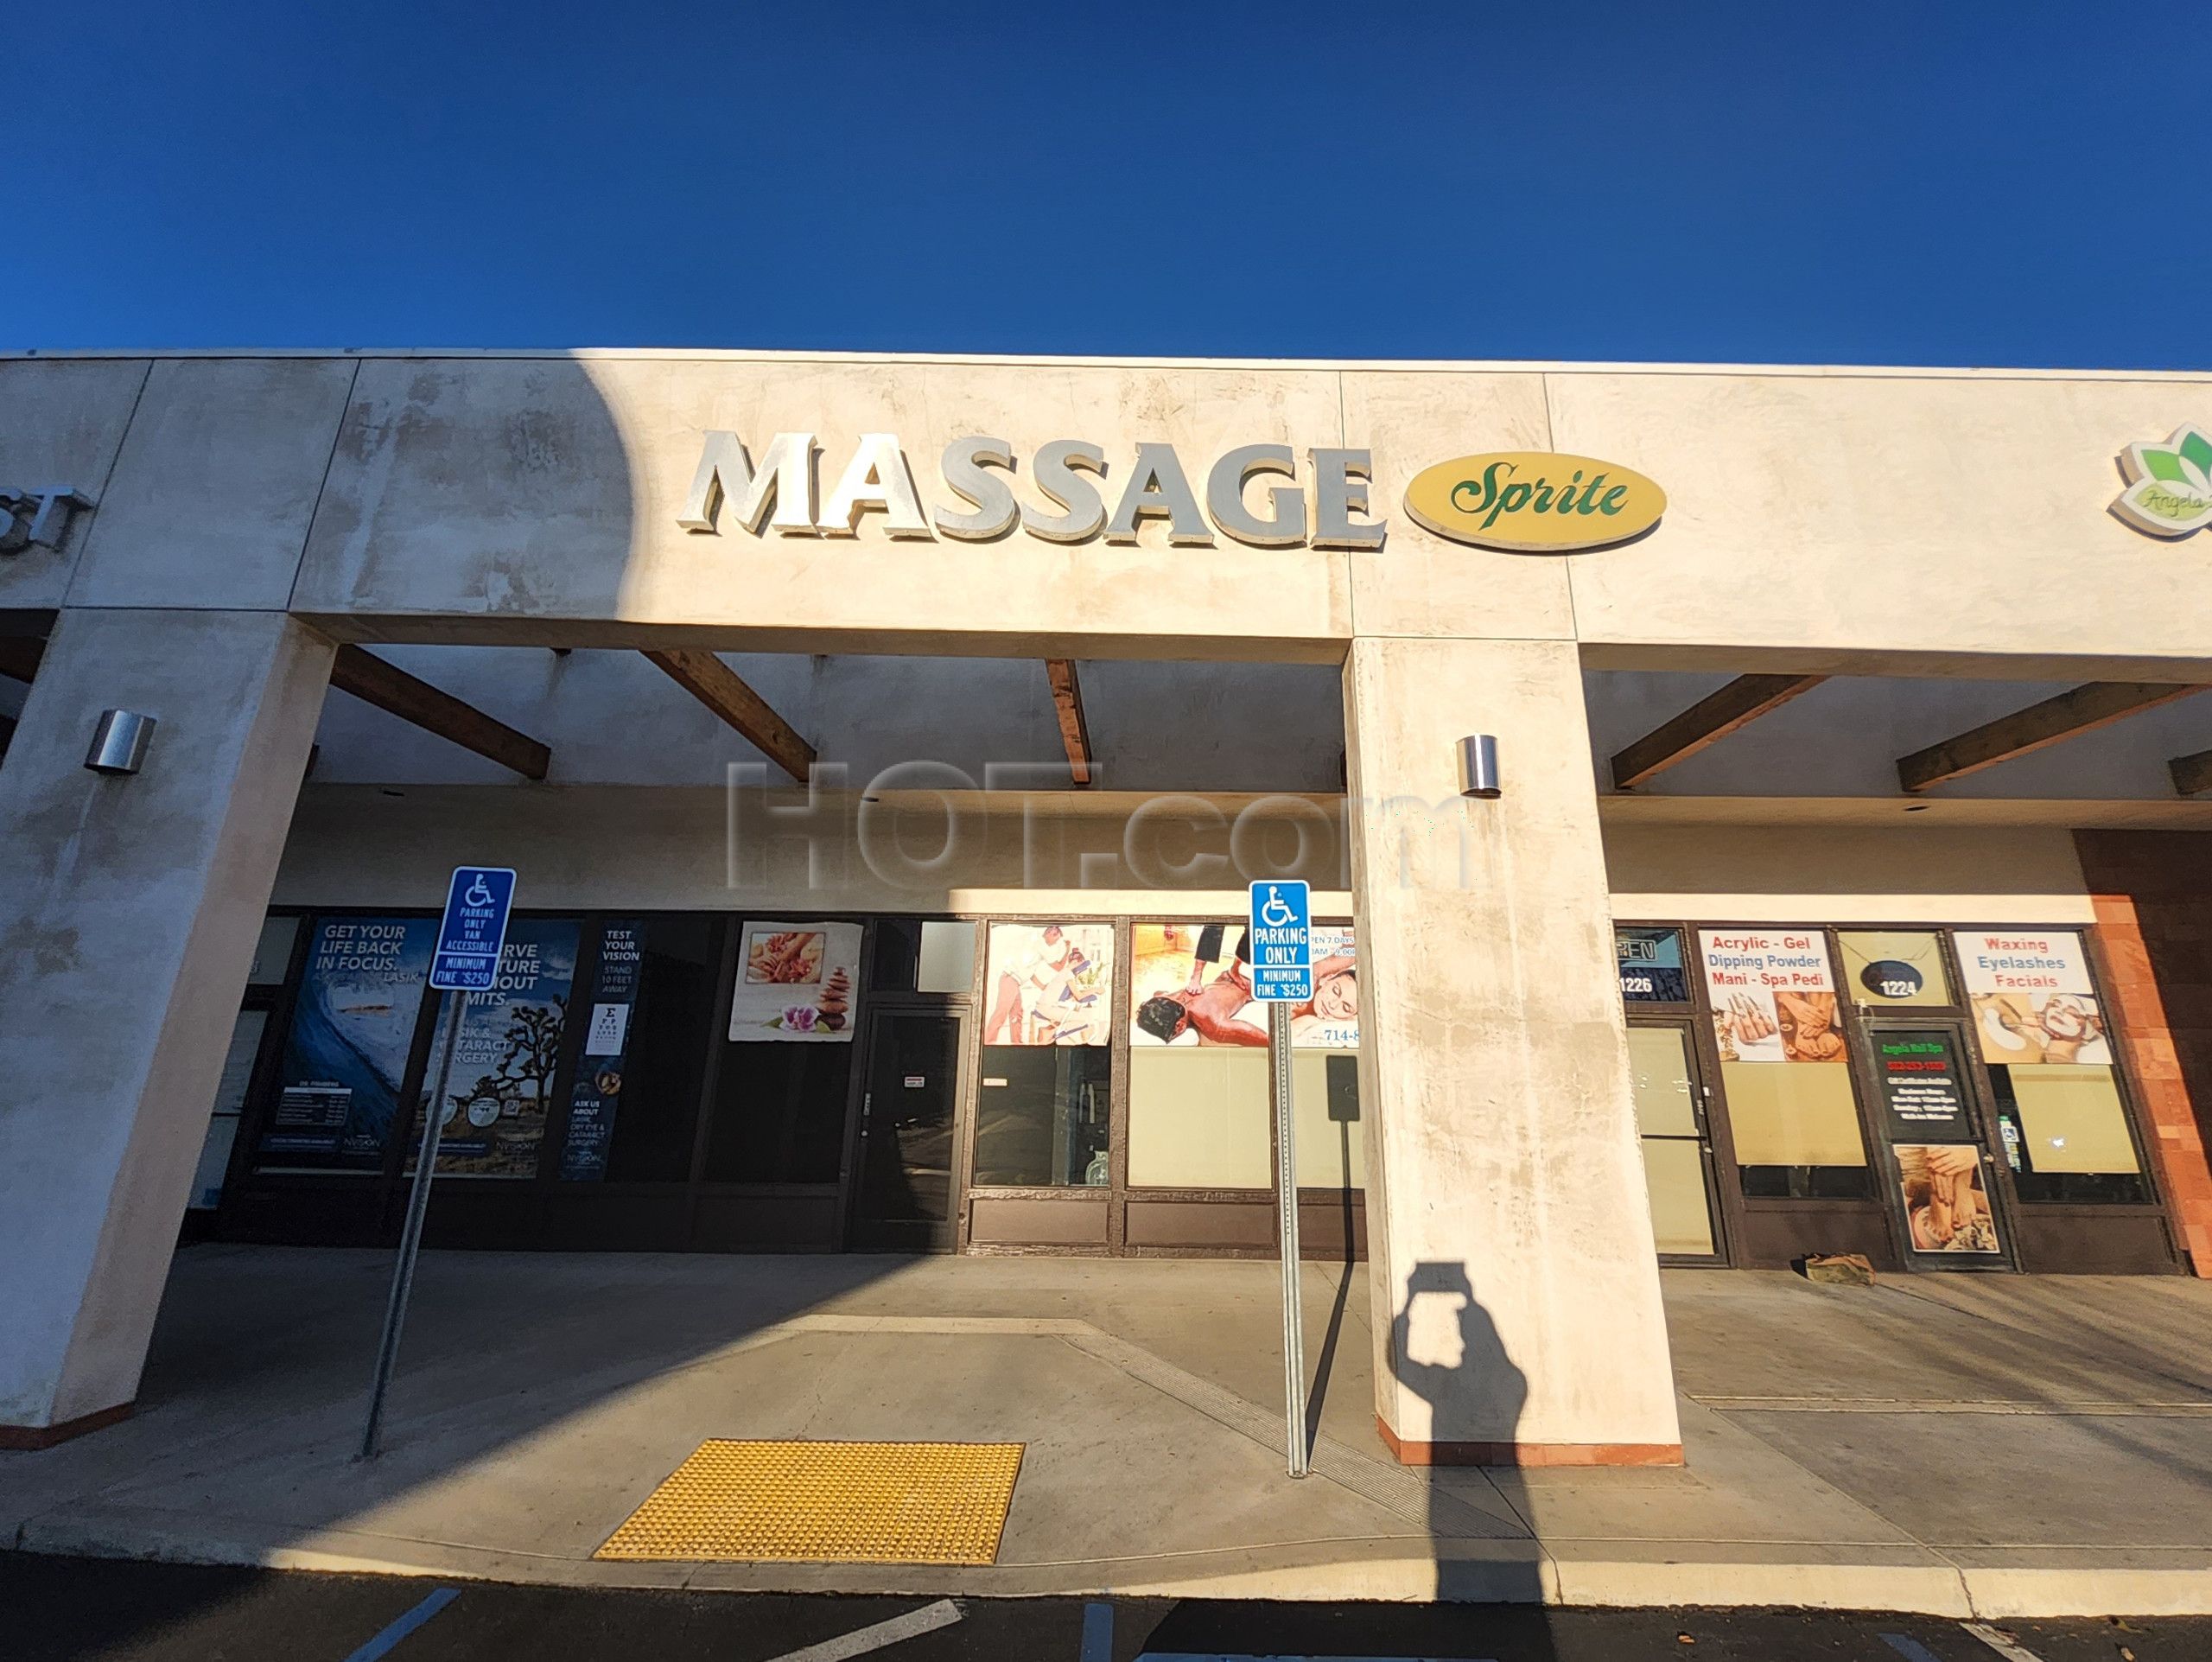 Santa Ana, California Massage Sprite